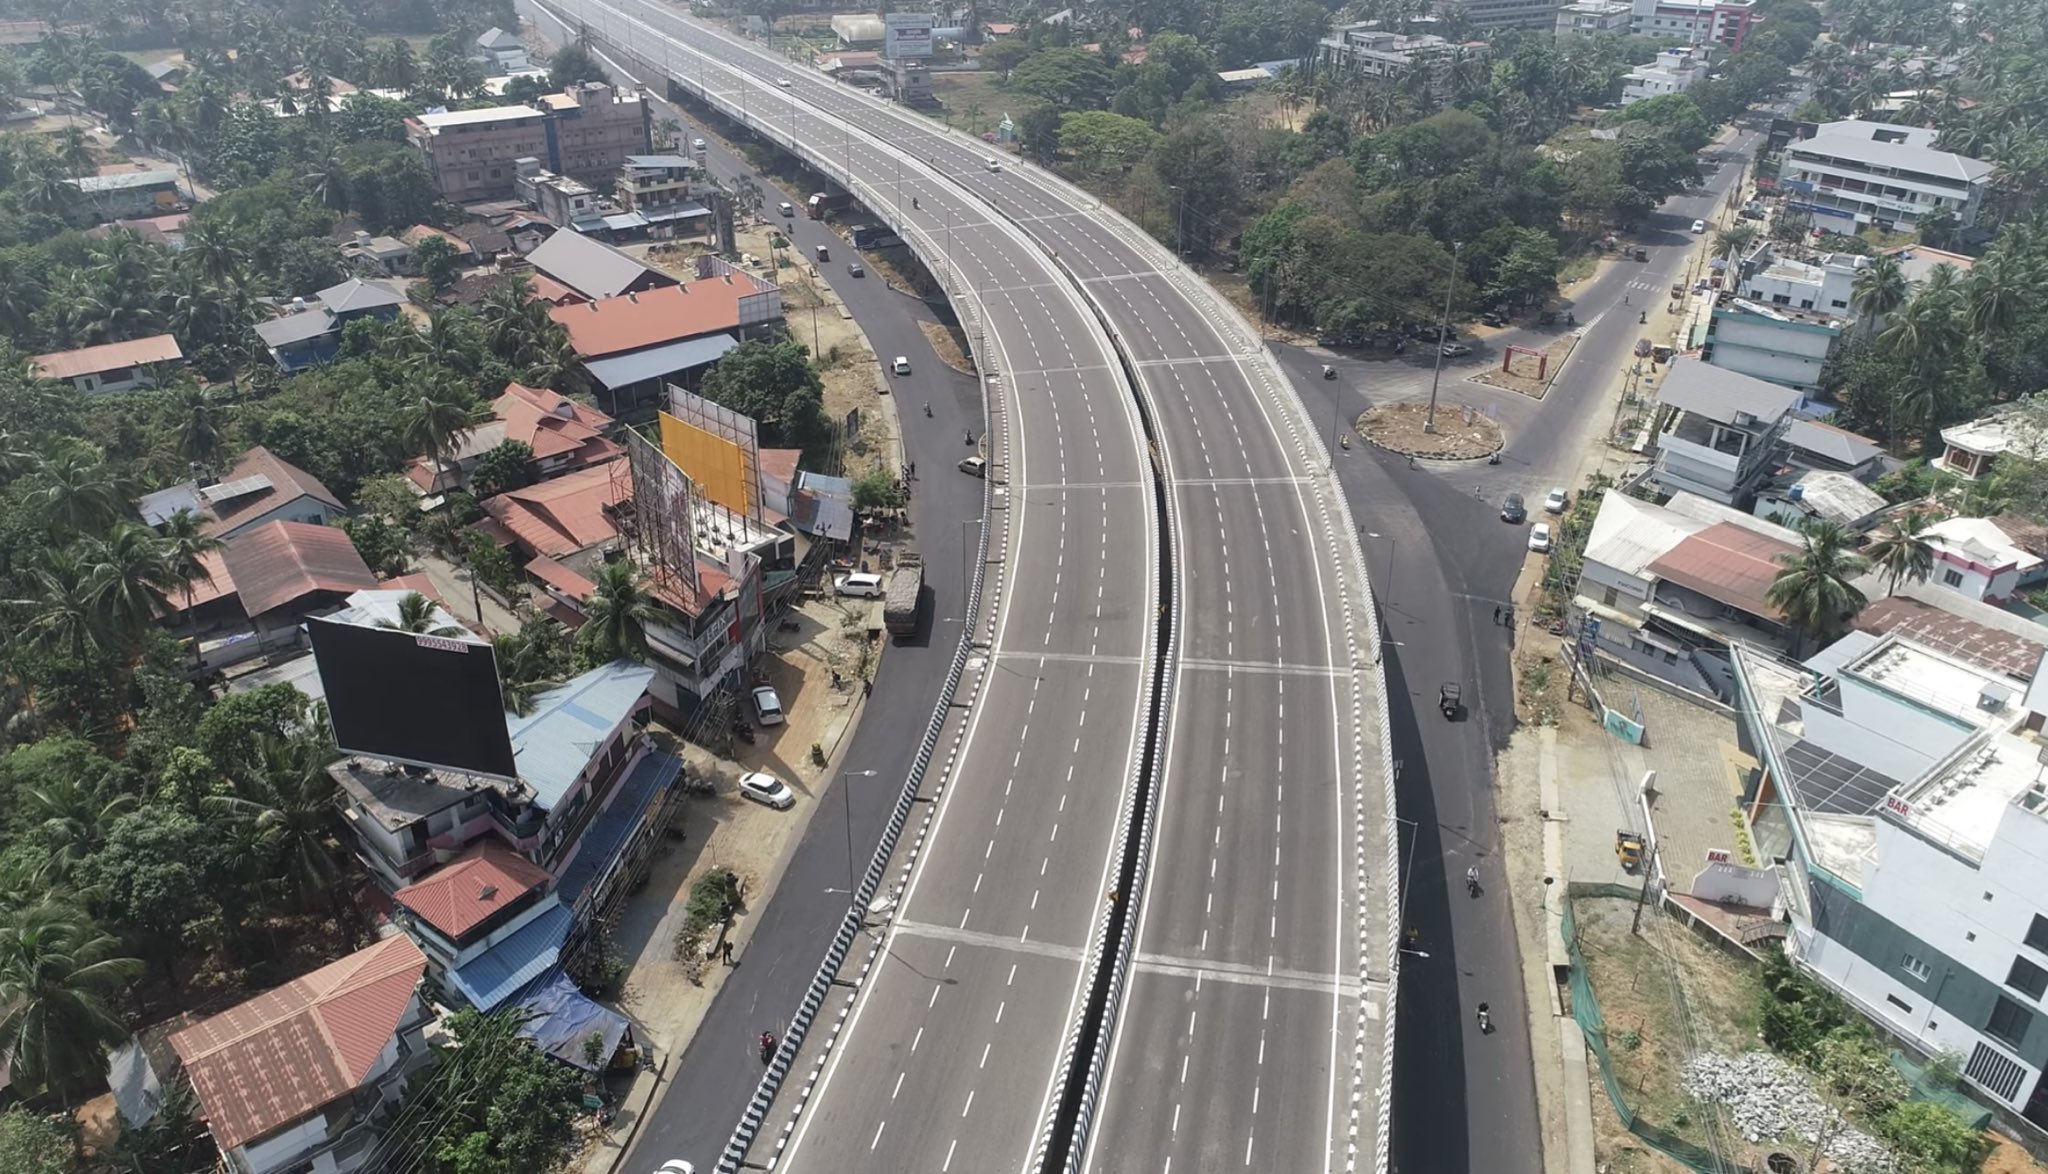 Chennai-Salem Expressway: Route, Current Status, Timelines, Latest News